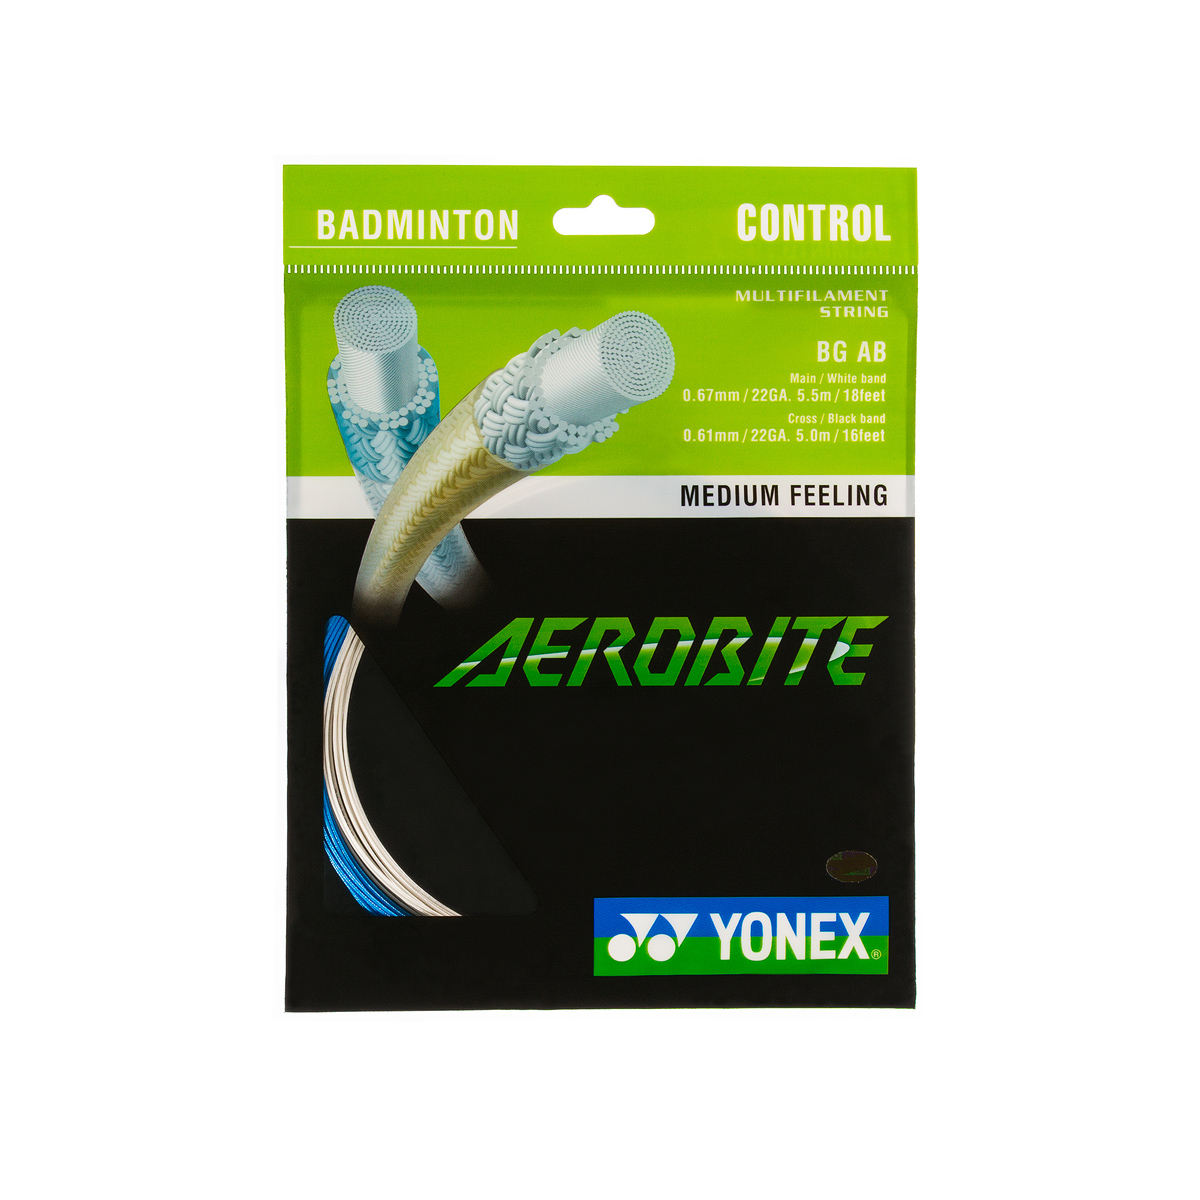 YONEX Badminton Saite - 16 BG AEROBITE SETDetailbild - 2